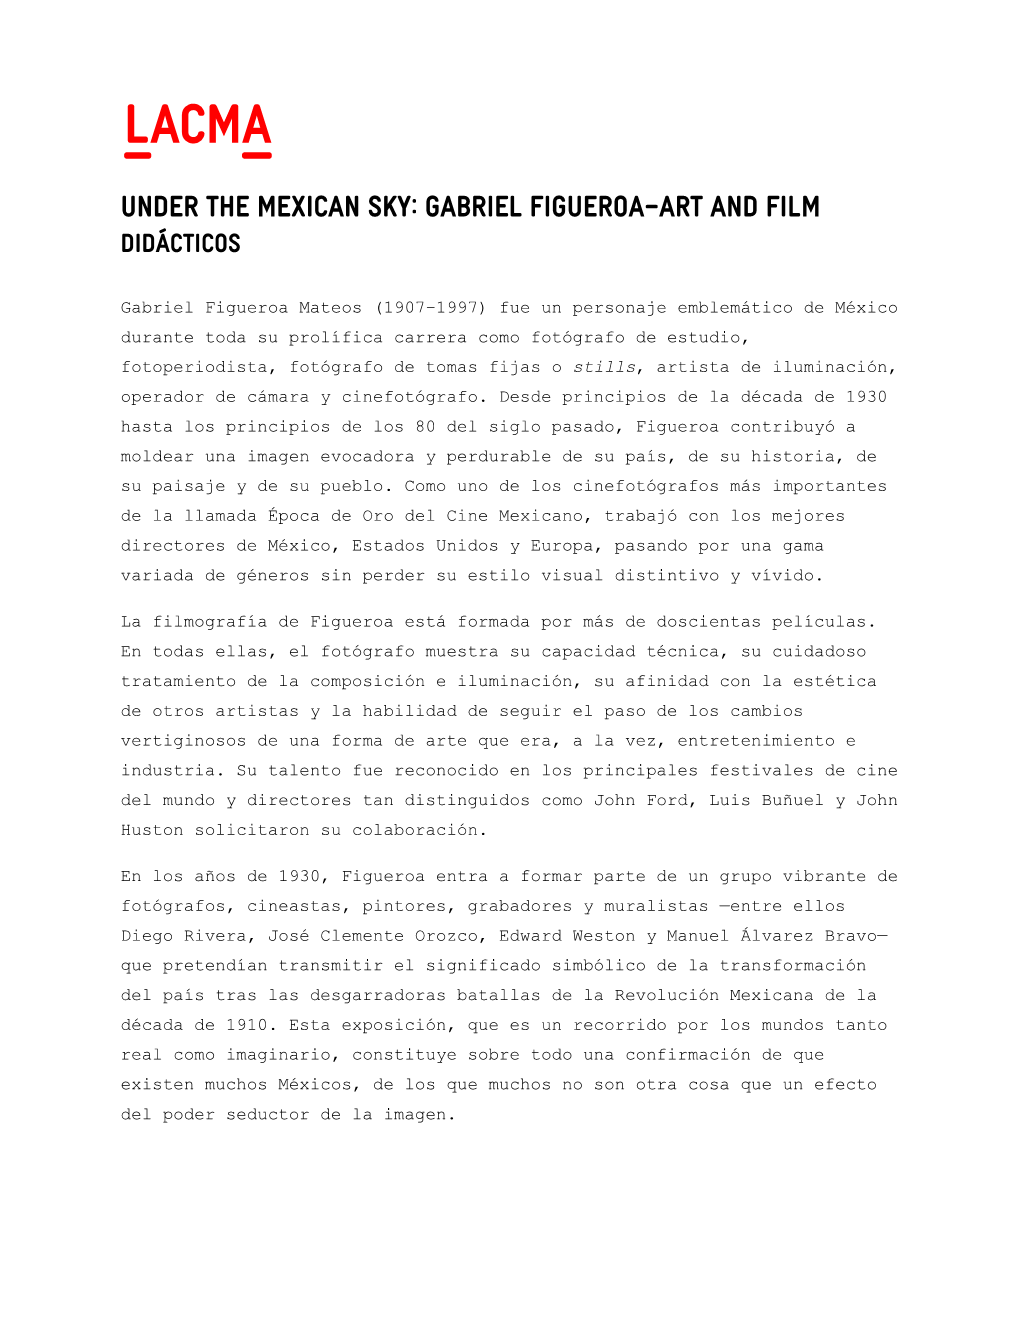 Gabriel Figueroa–Art and Film Didácticos